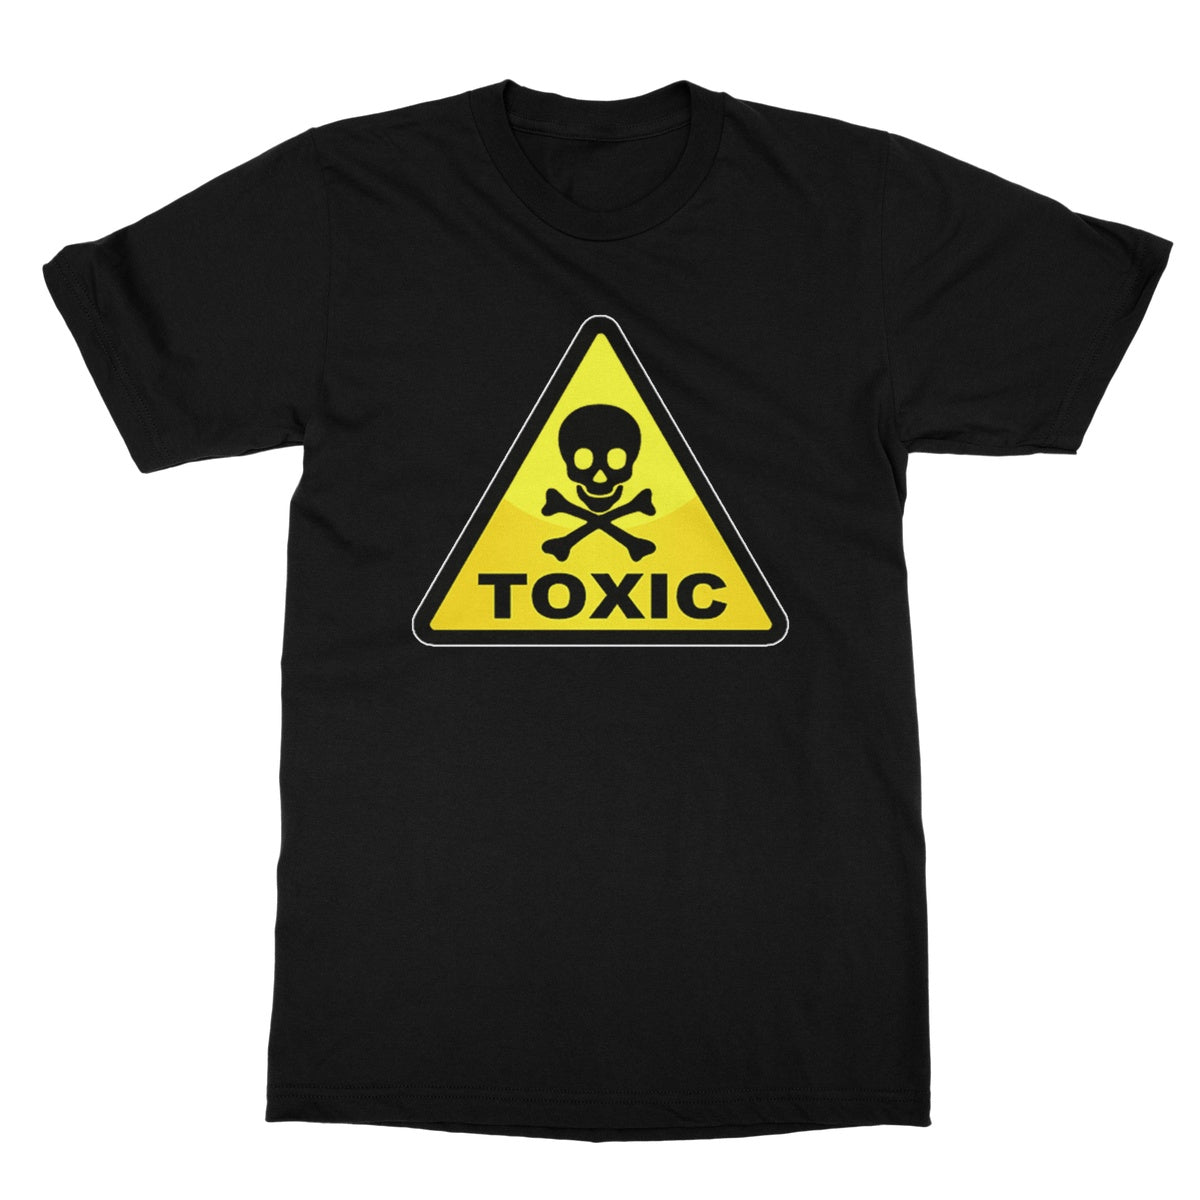 toxic t shirt black